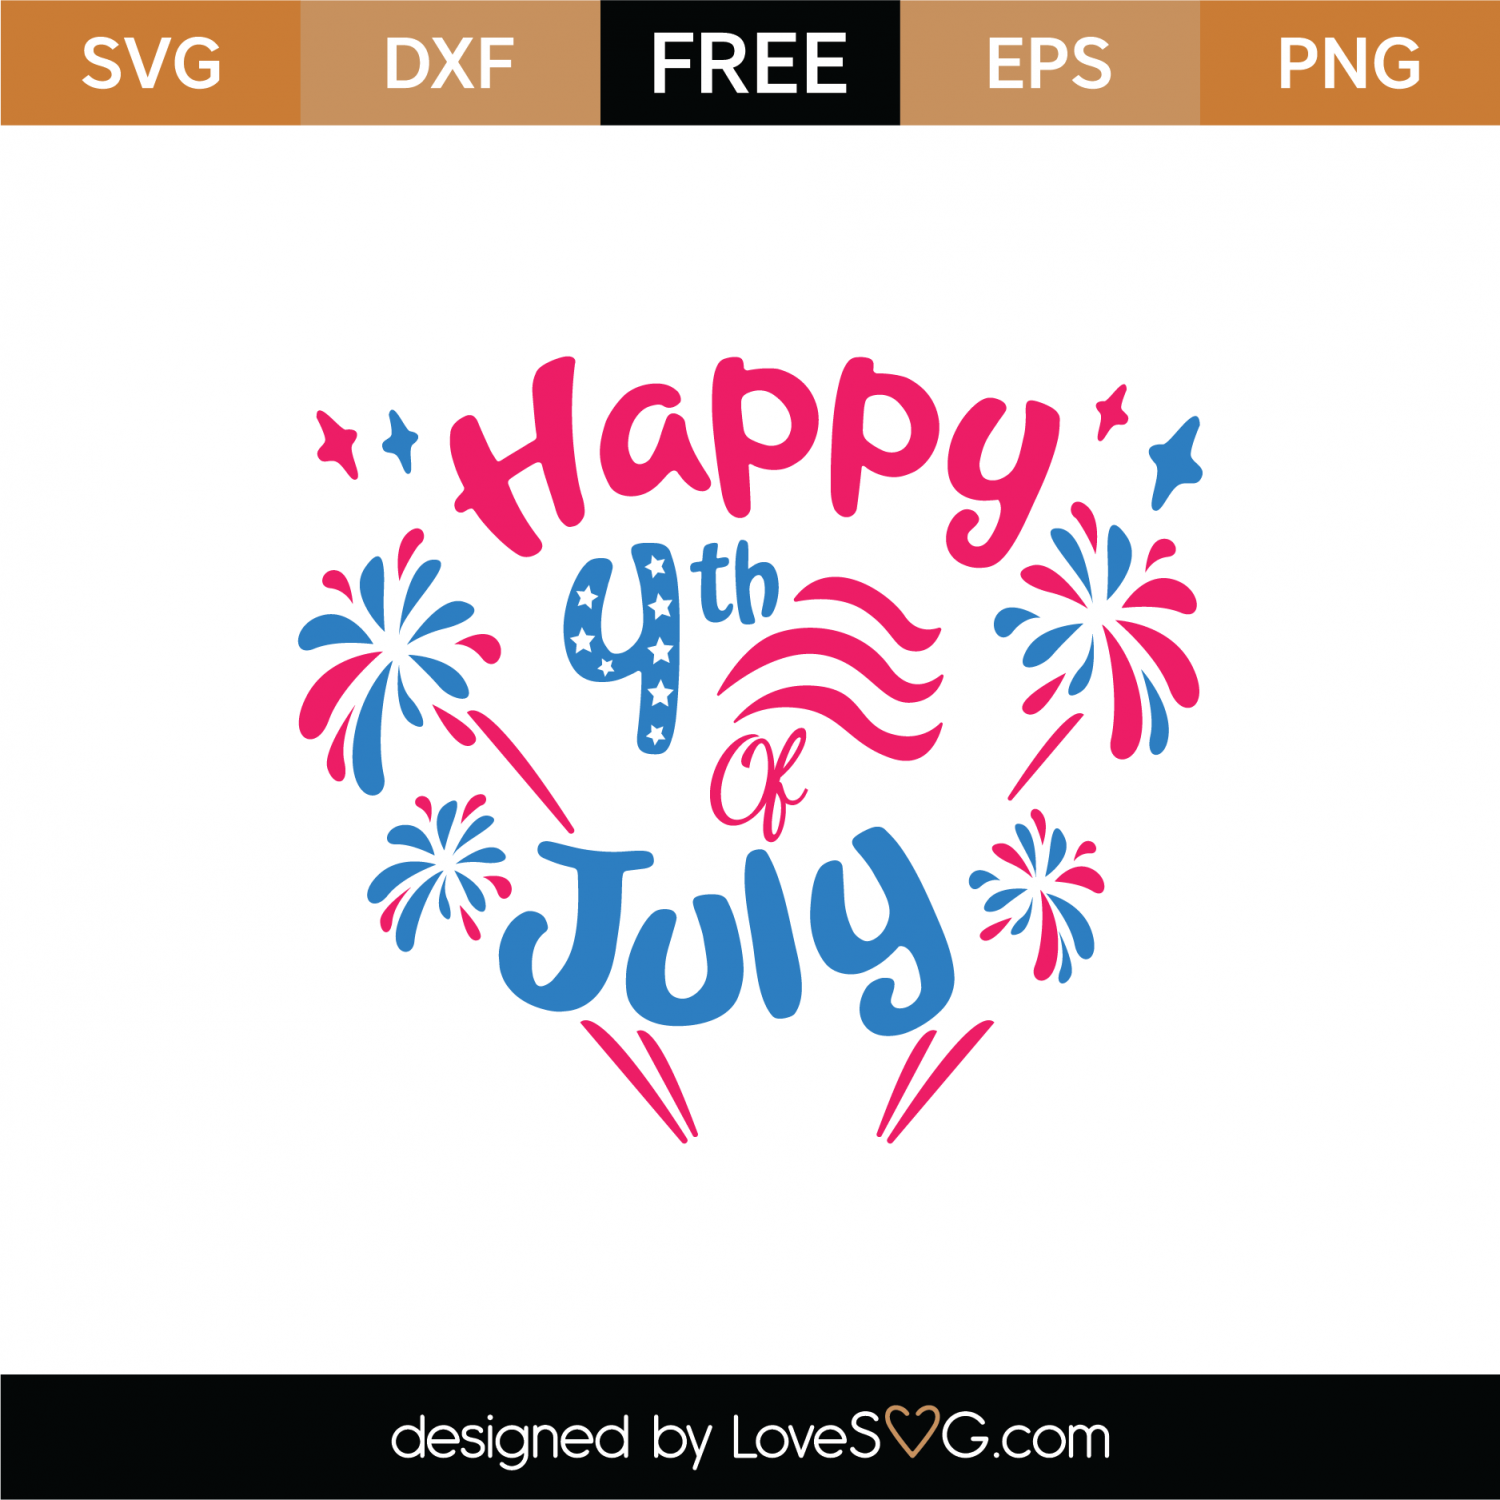 Free Happy 4th Of July SVG Cut File | Lovesvg.com